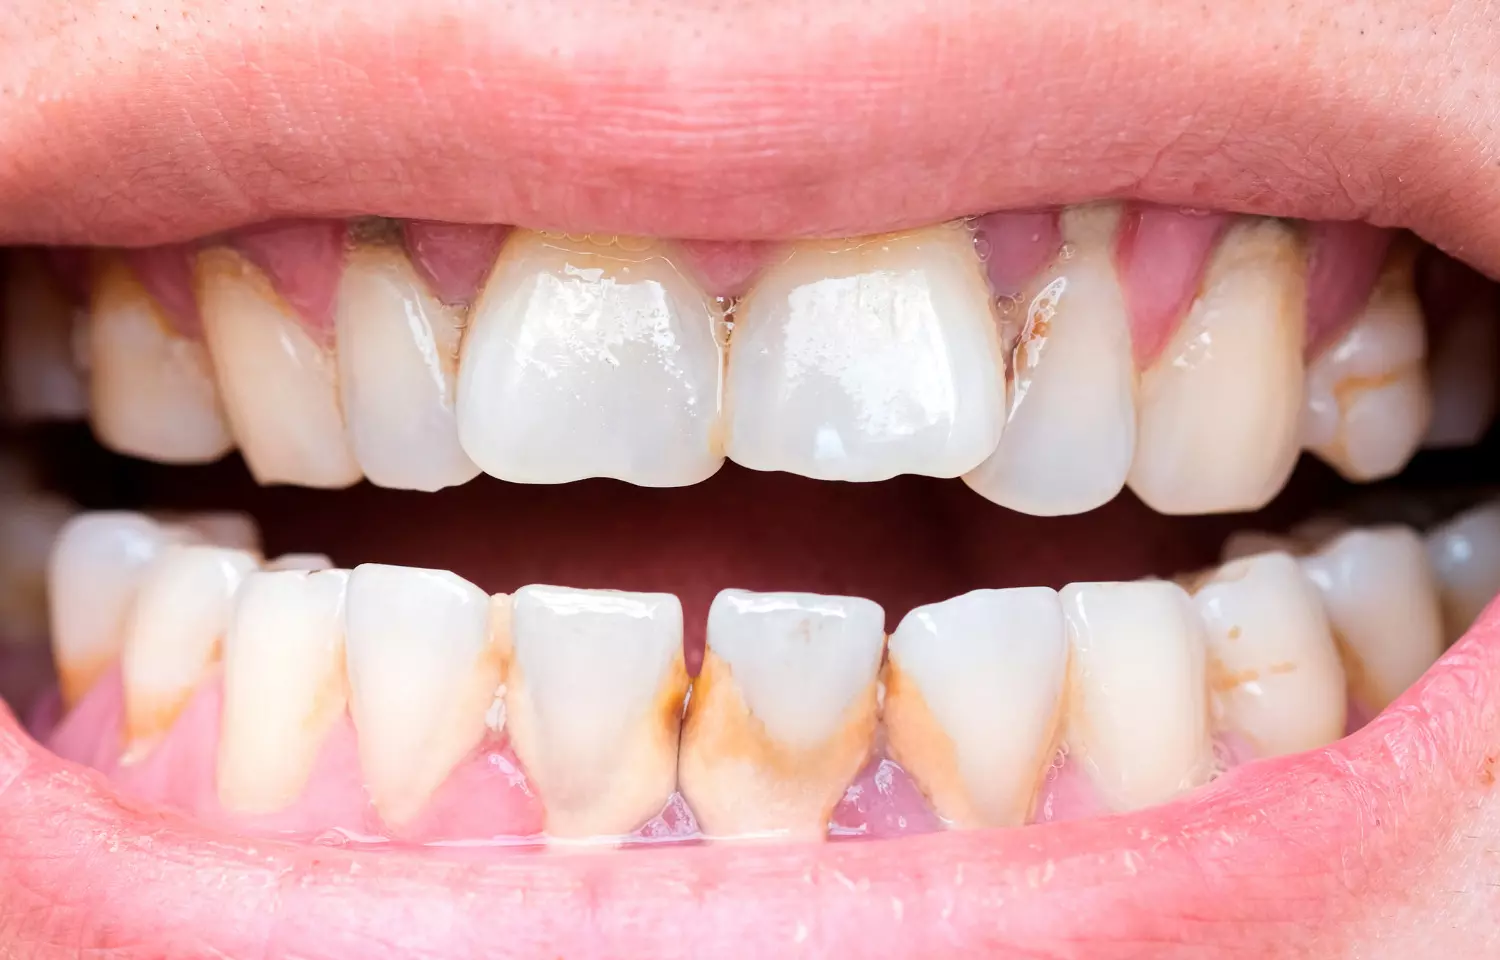 Diabetes may weaken teeth and promote tooth decay